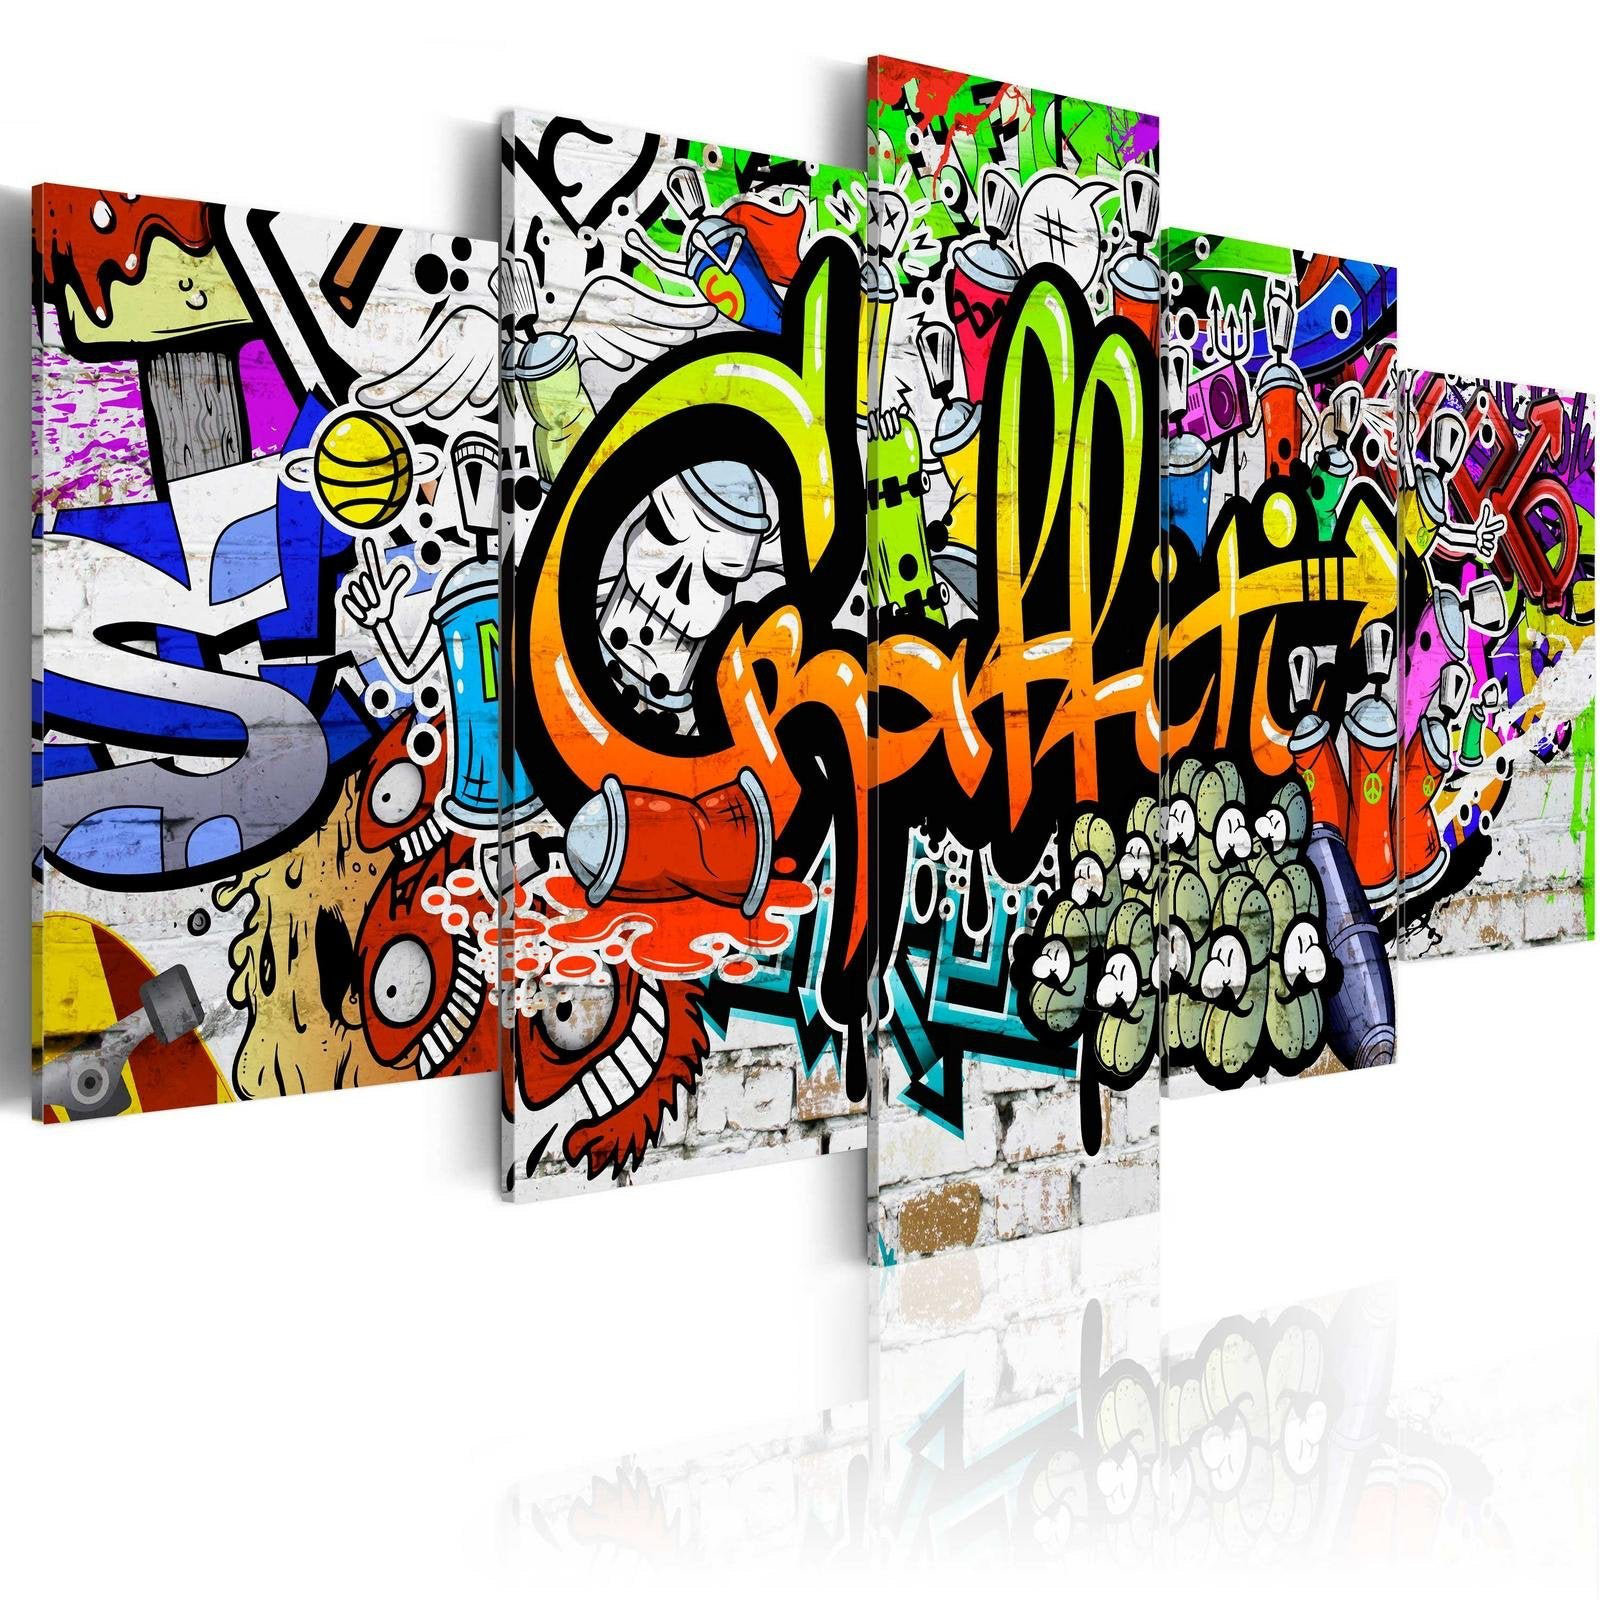 Graffiti Writing Street Art Urban by Emmanuel Signorino Laptop Sleeve for  Sale by Emmanuel Signorino